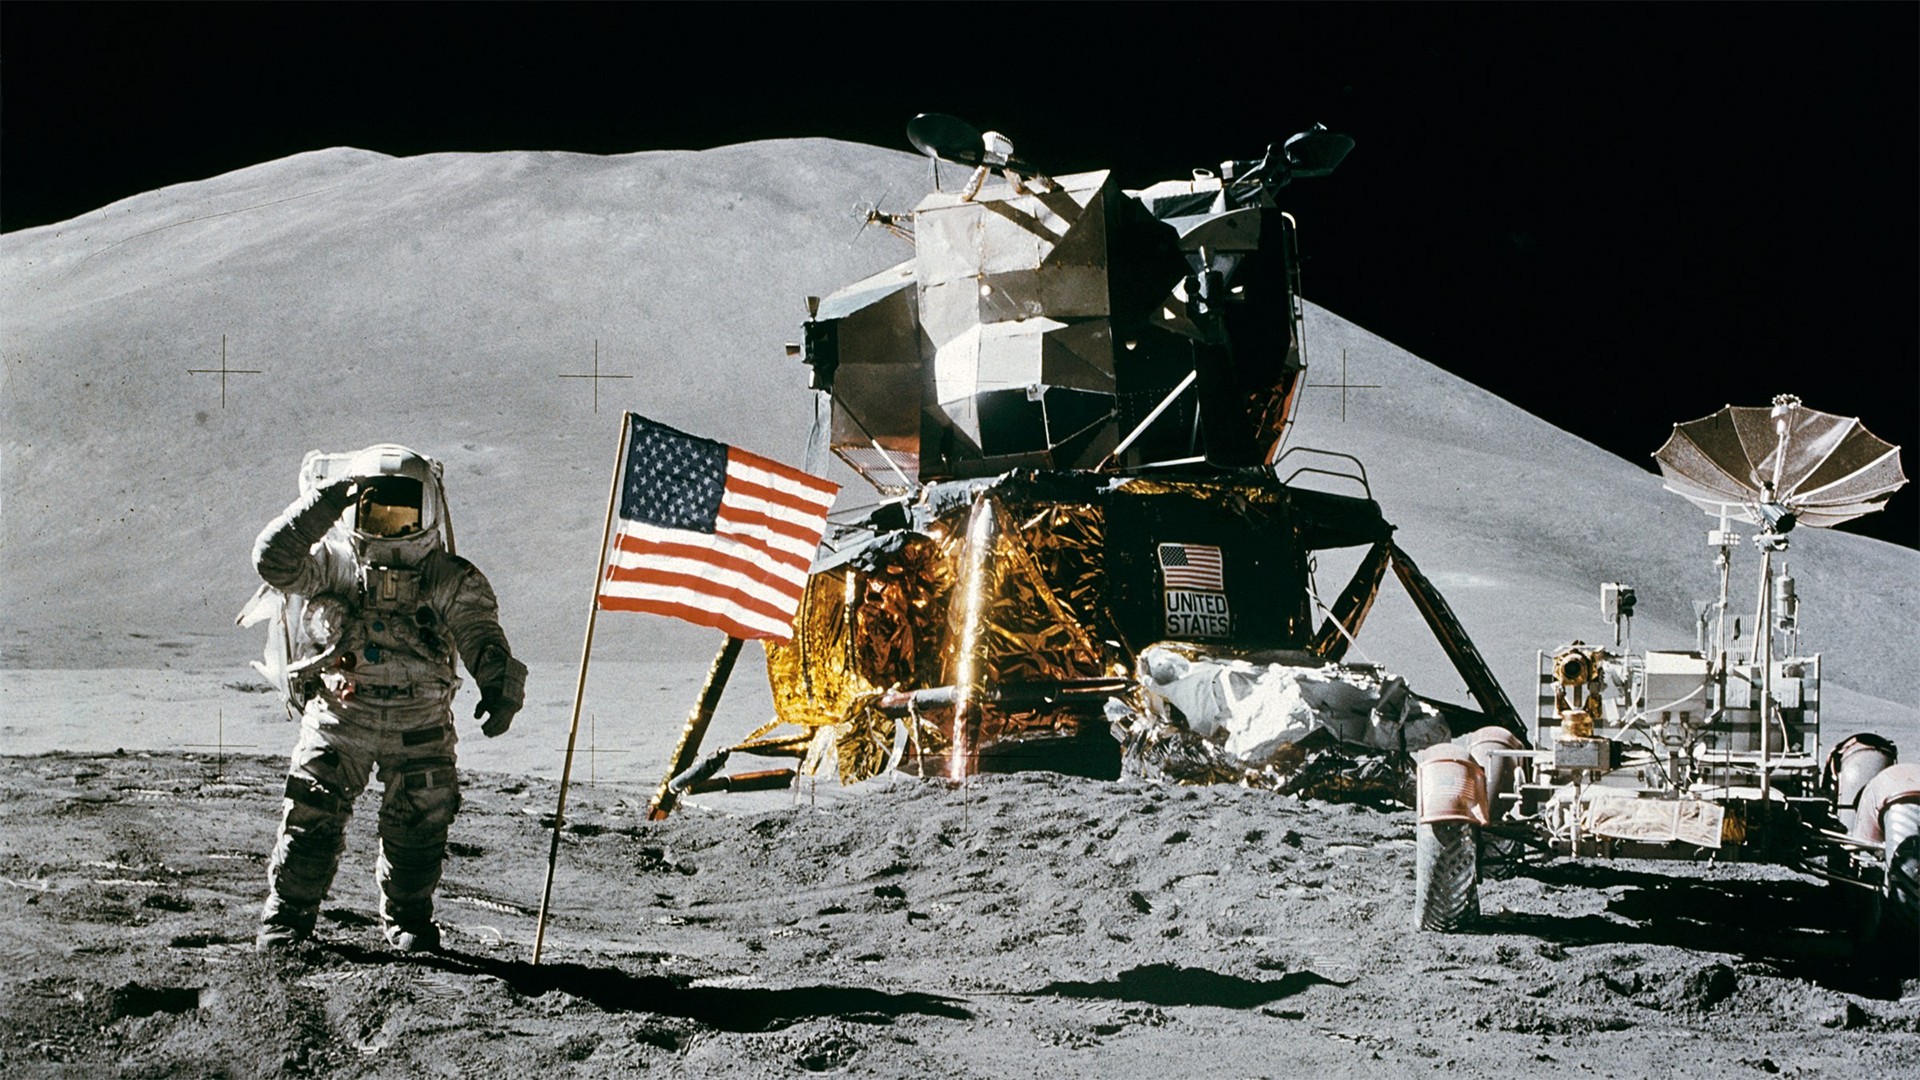 Moon Space Astronaut Apollo 1920x1080